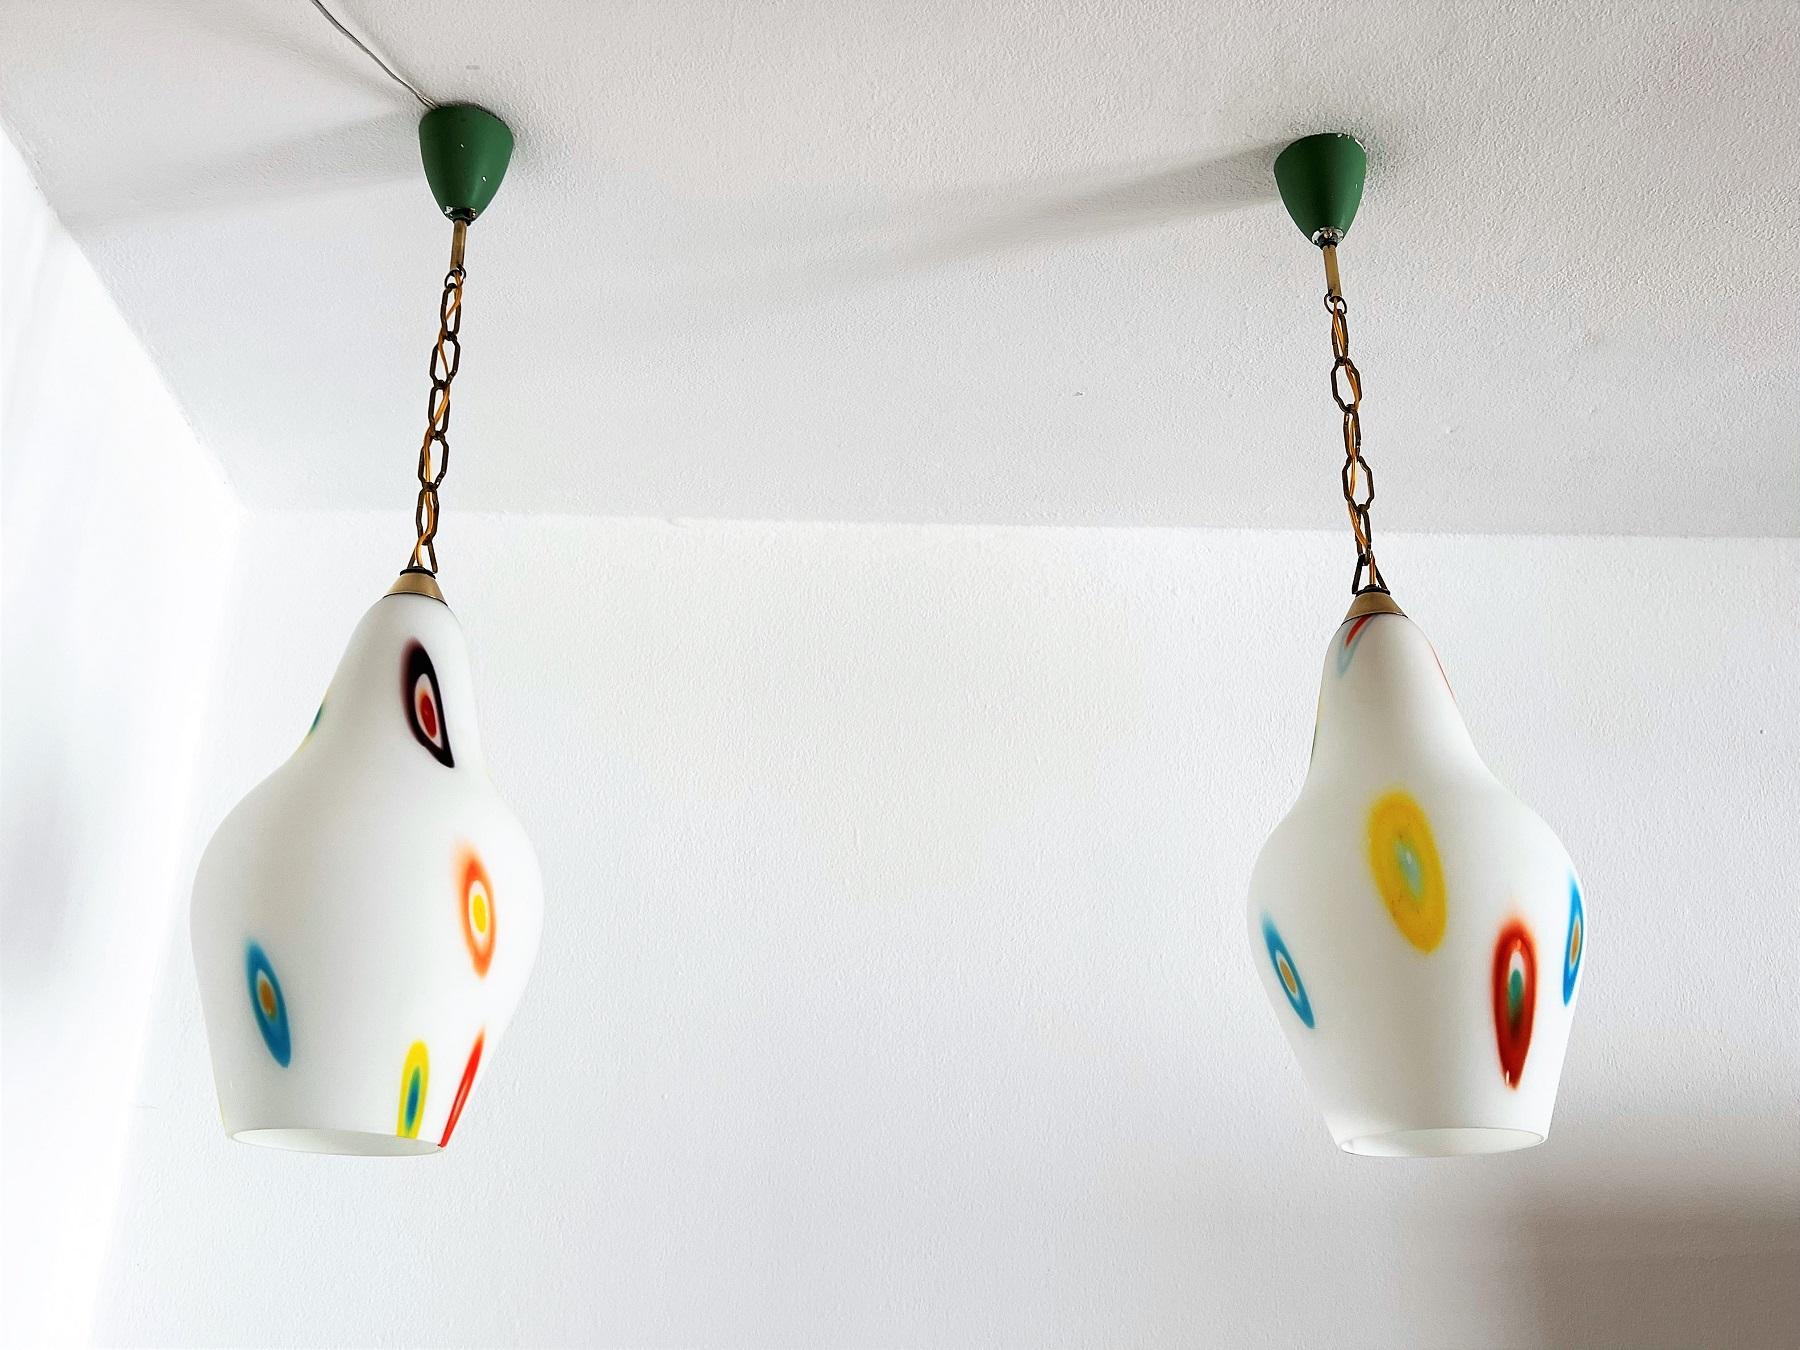 Italian Midcentury Murano Glass Pendant Lights with Colorful Murrine, 1970s For Sale 3